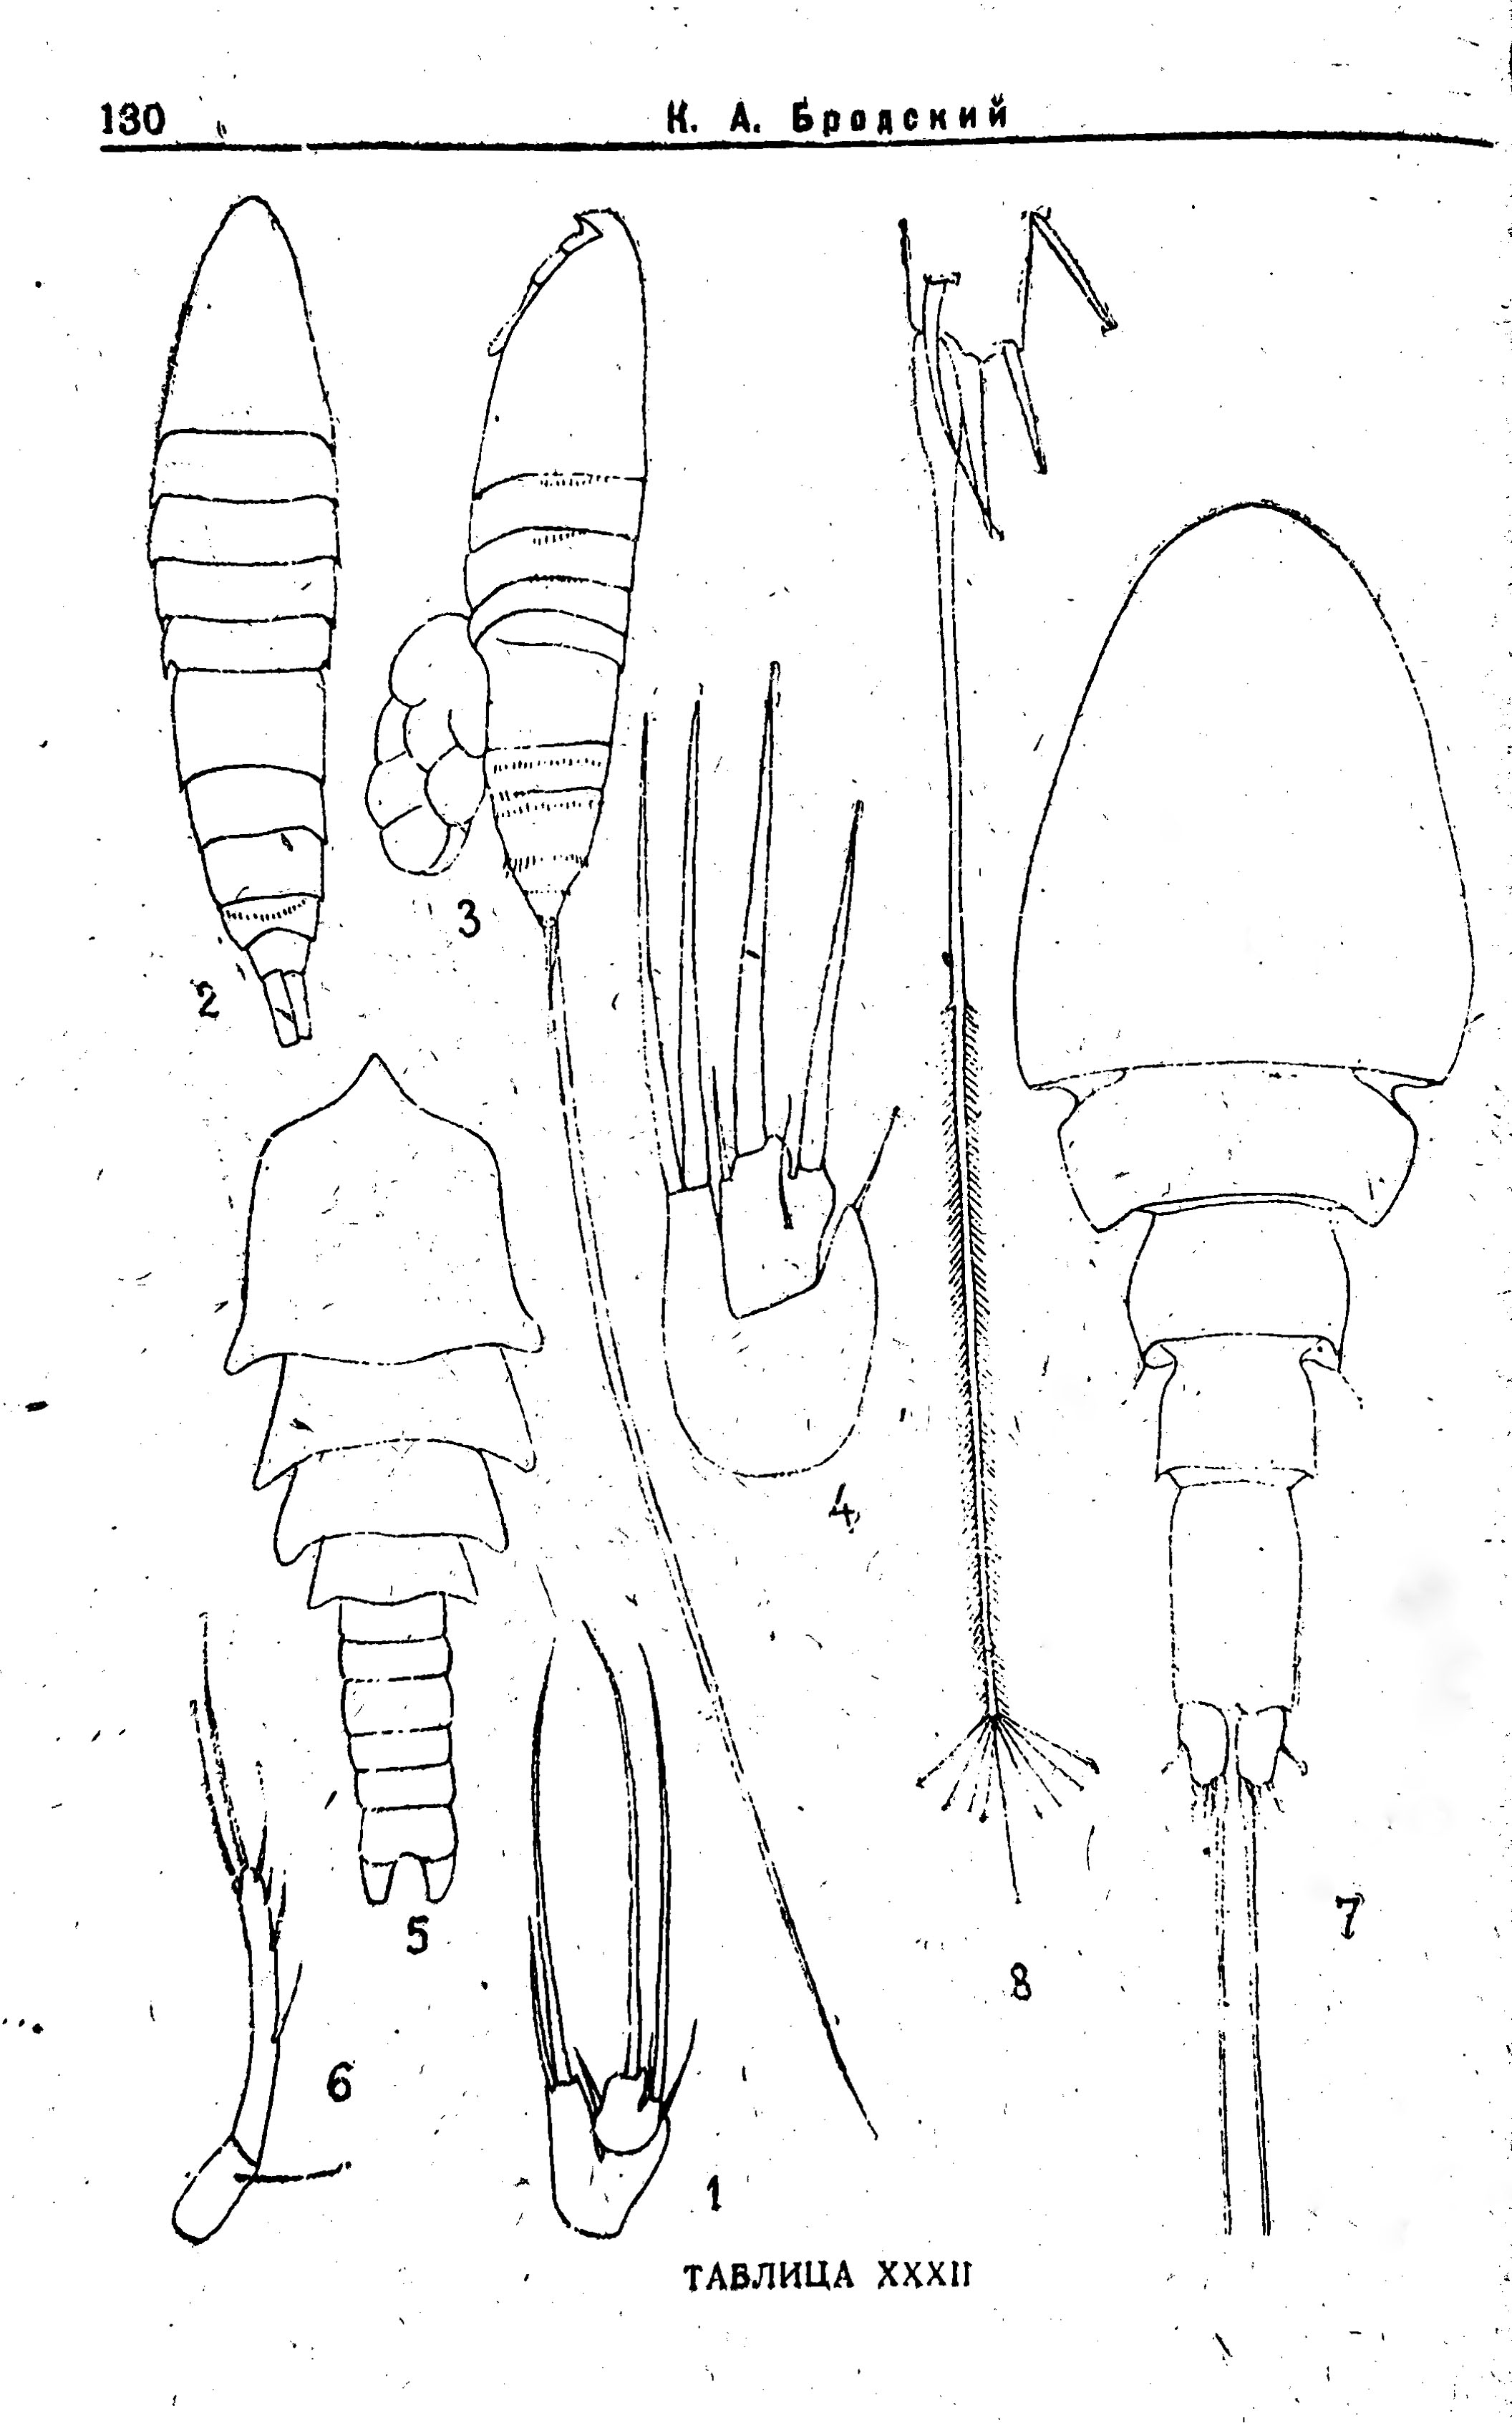 Species Saphirella sp. - Plate 1 of morphological figures